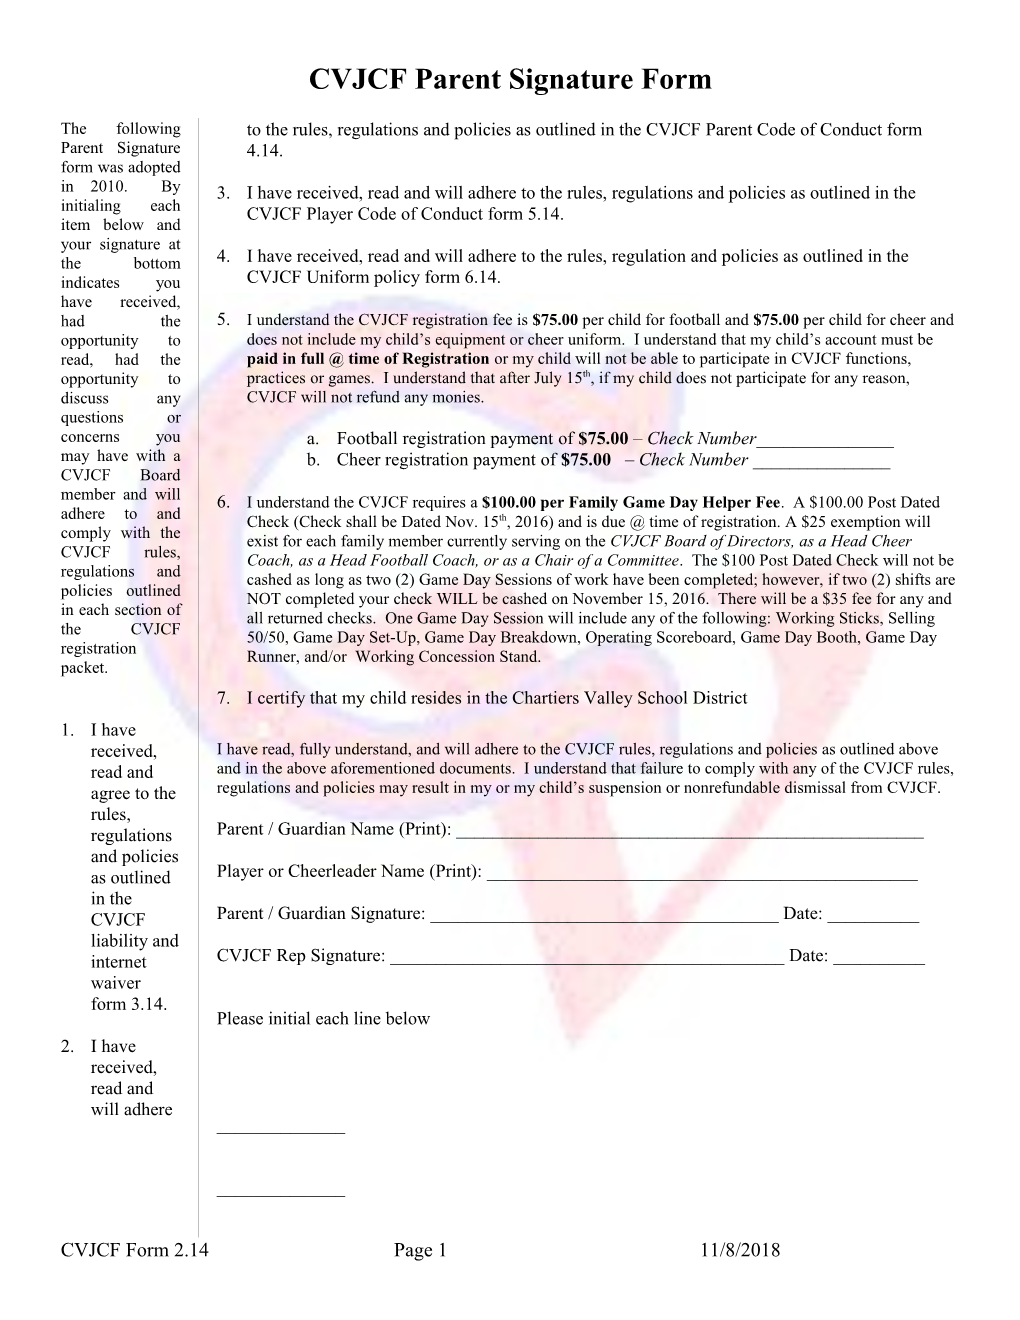 CVJCF Parent Signature Form